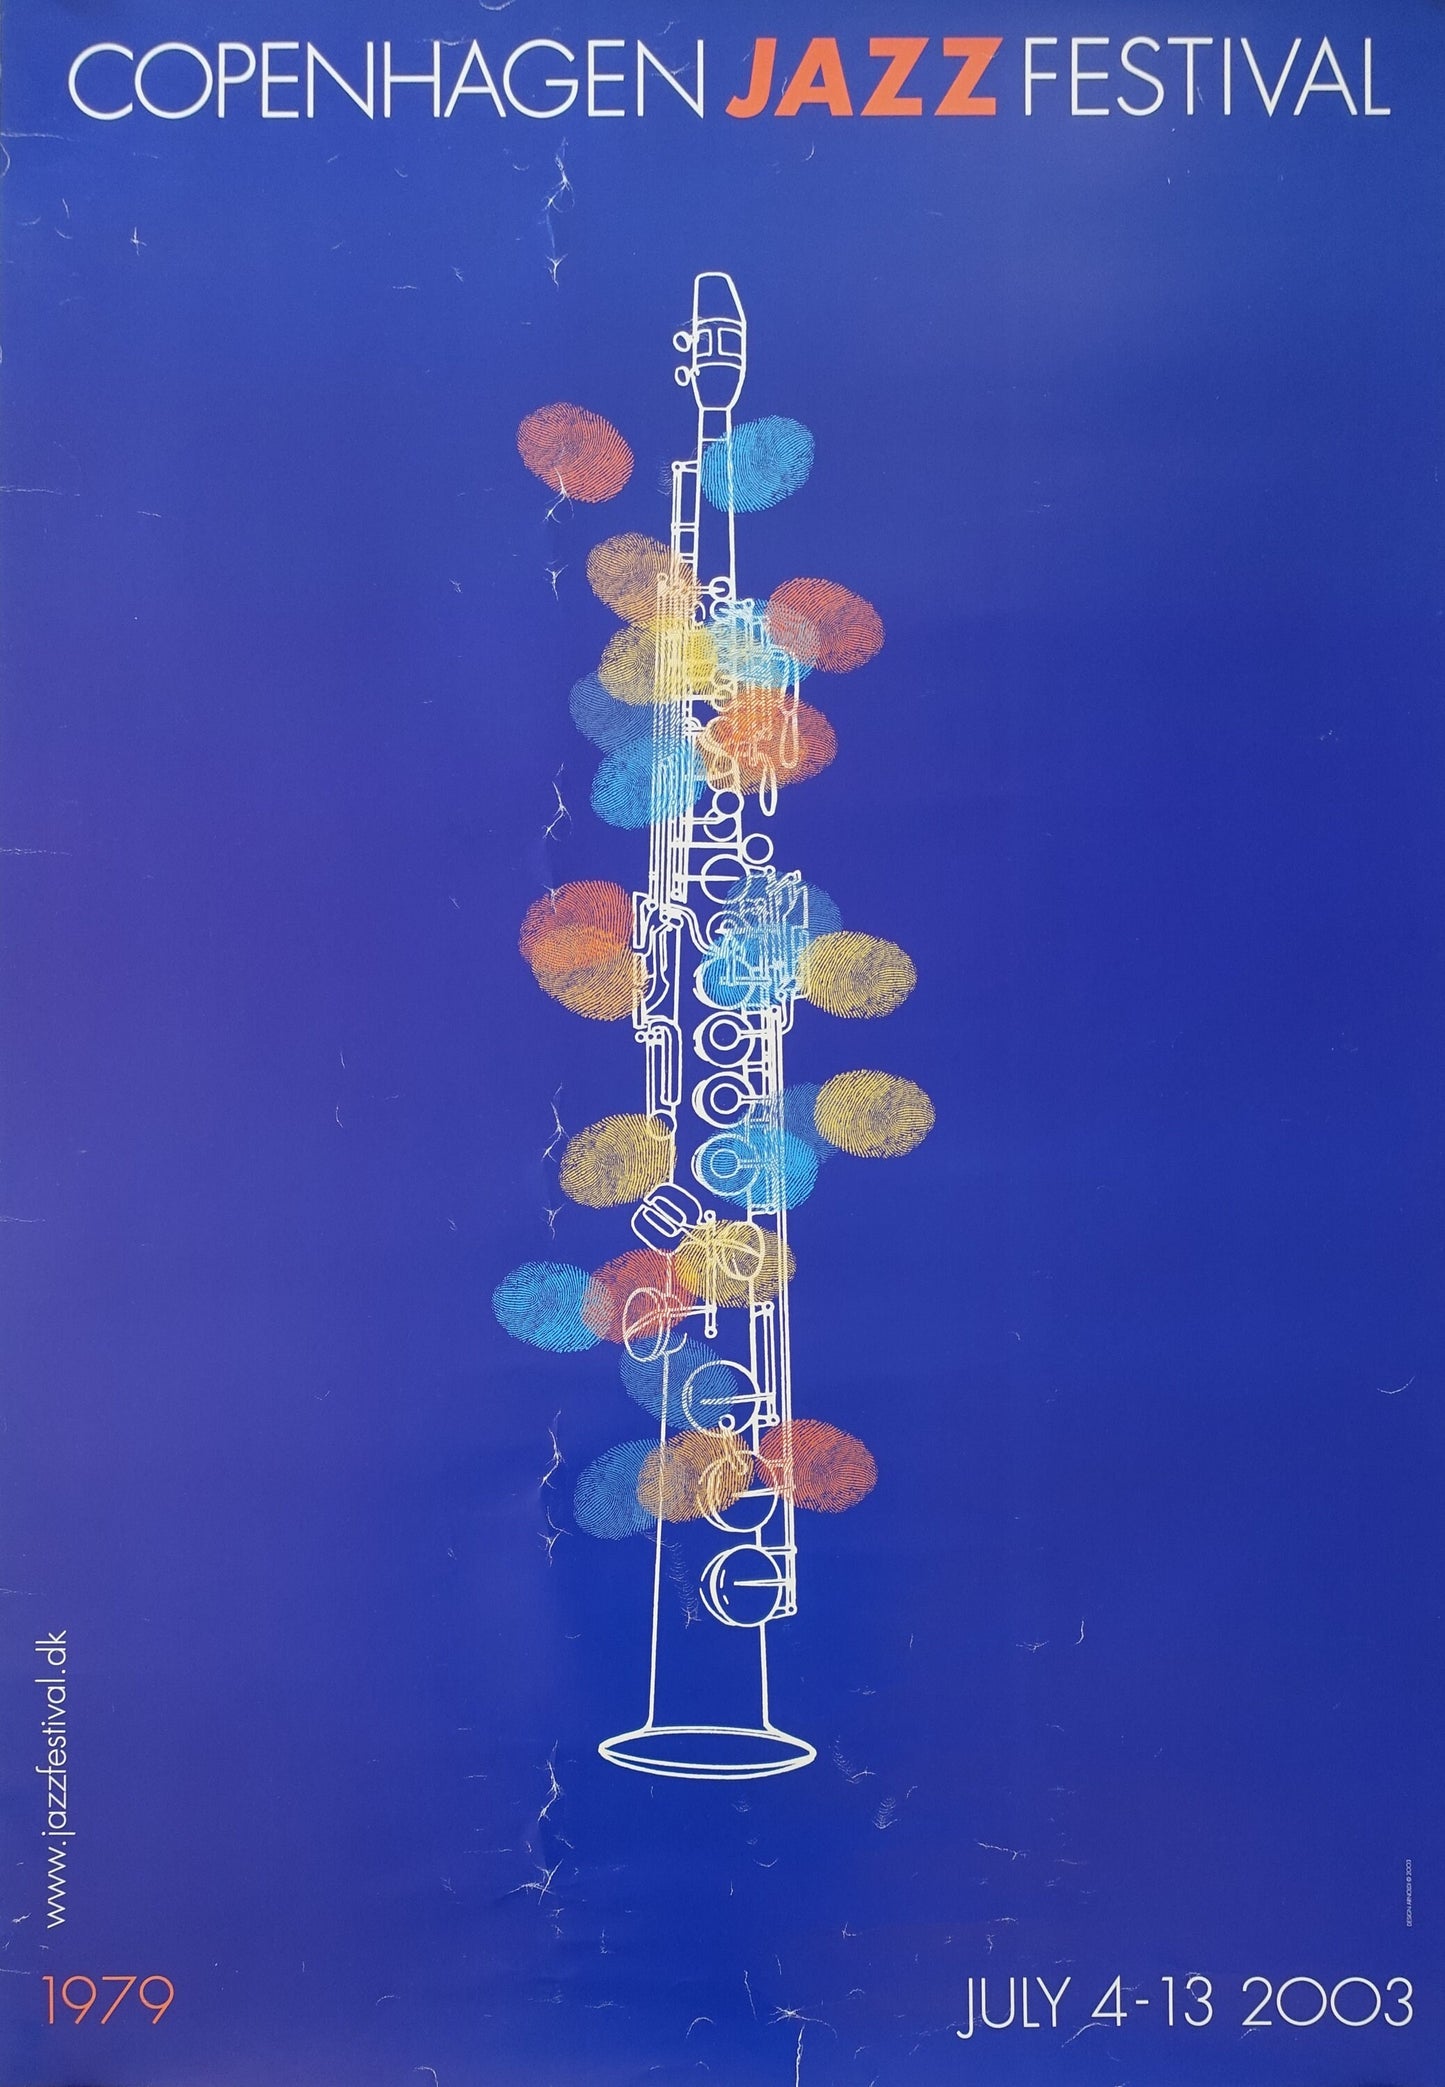 2003 Copenhagen Jazz Festival by Arnoldi - Original Vintage Poster